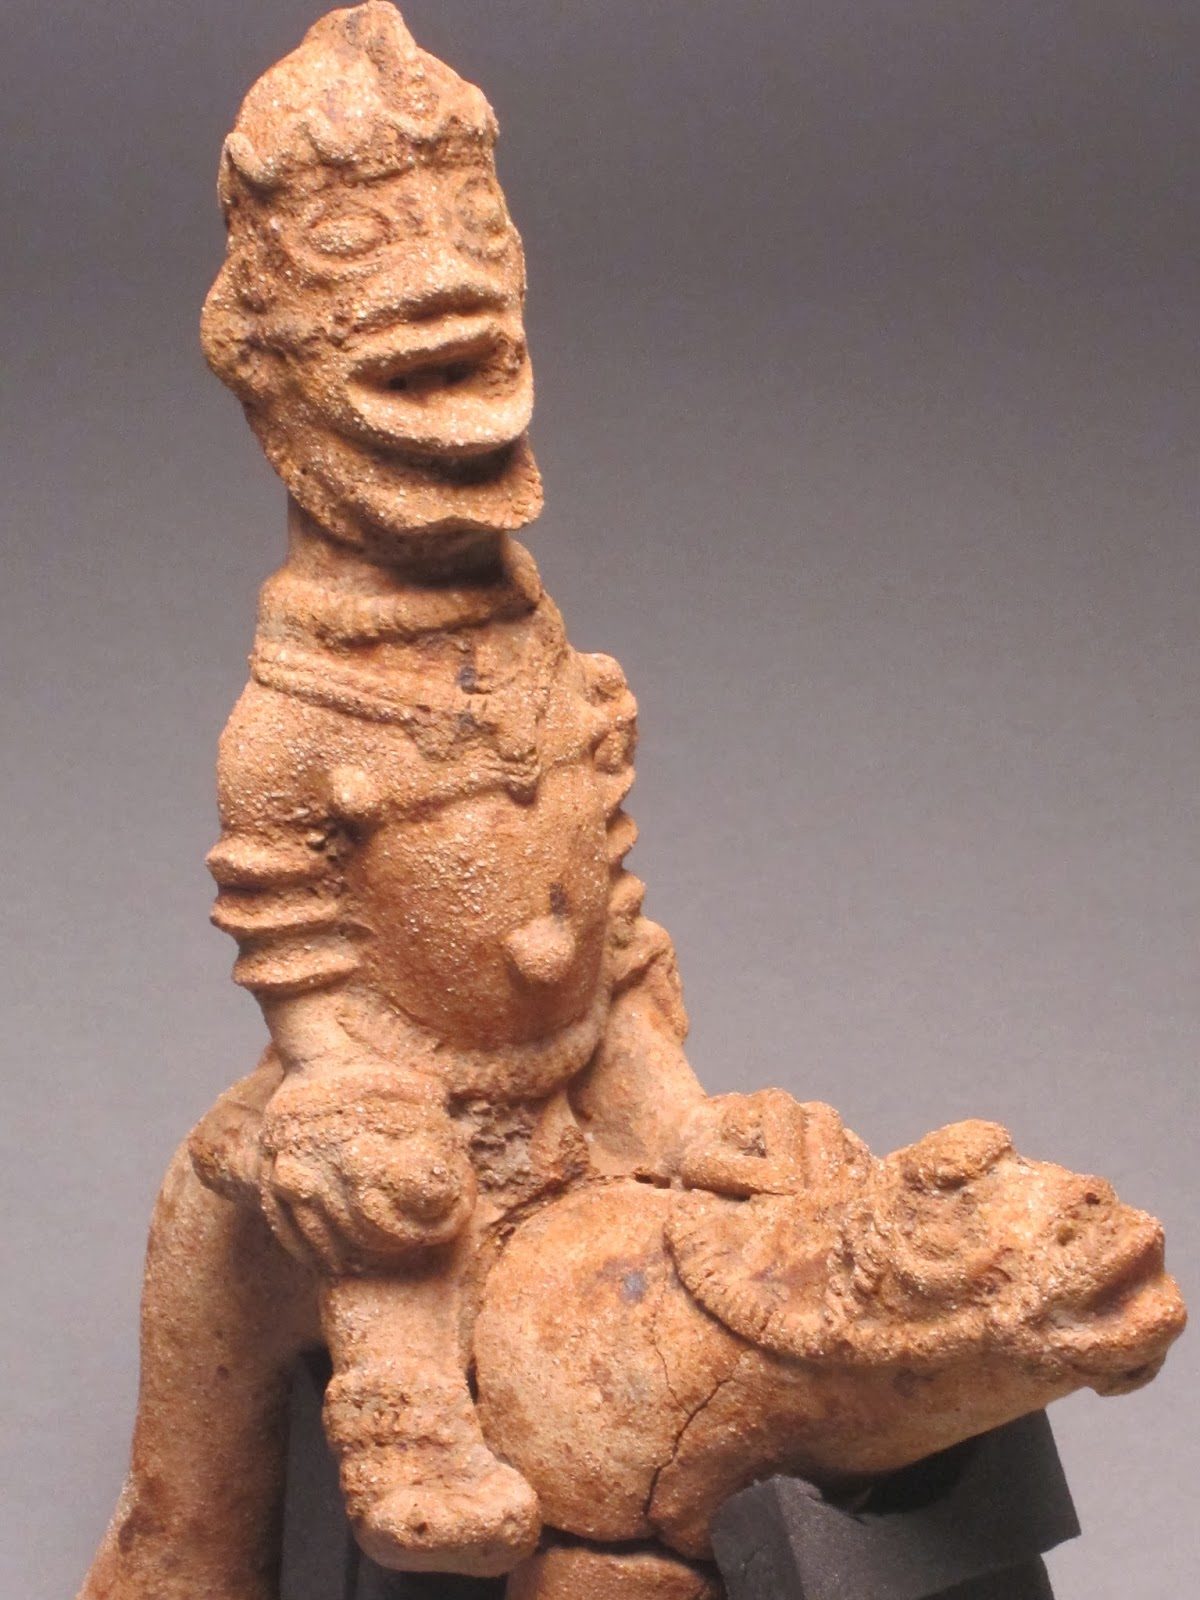 Figurine from Northern Ghana2